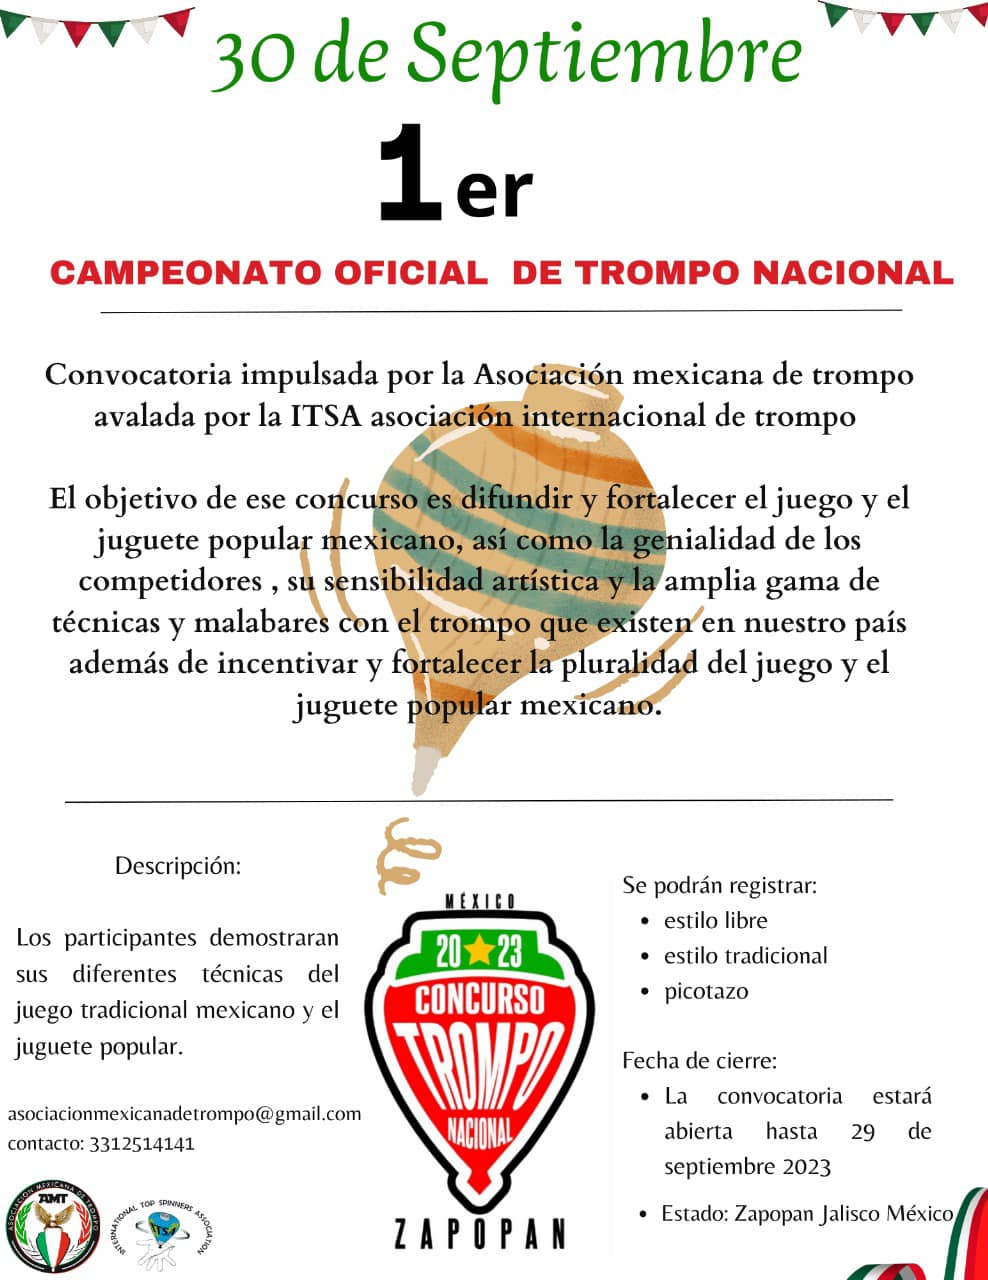 1 er Campeonato Oficial de Trompo Nacional - Traditional Sports